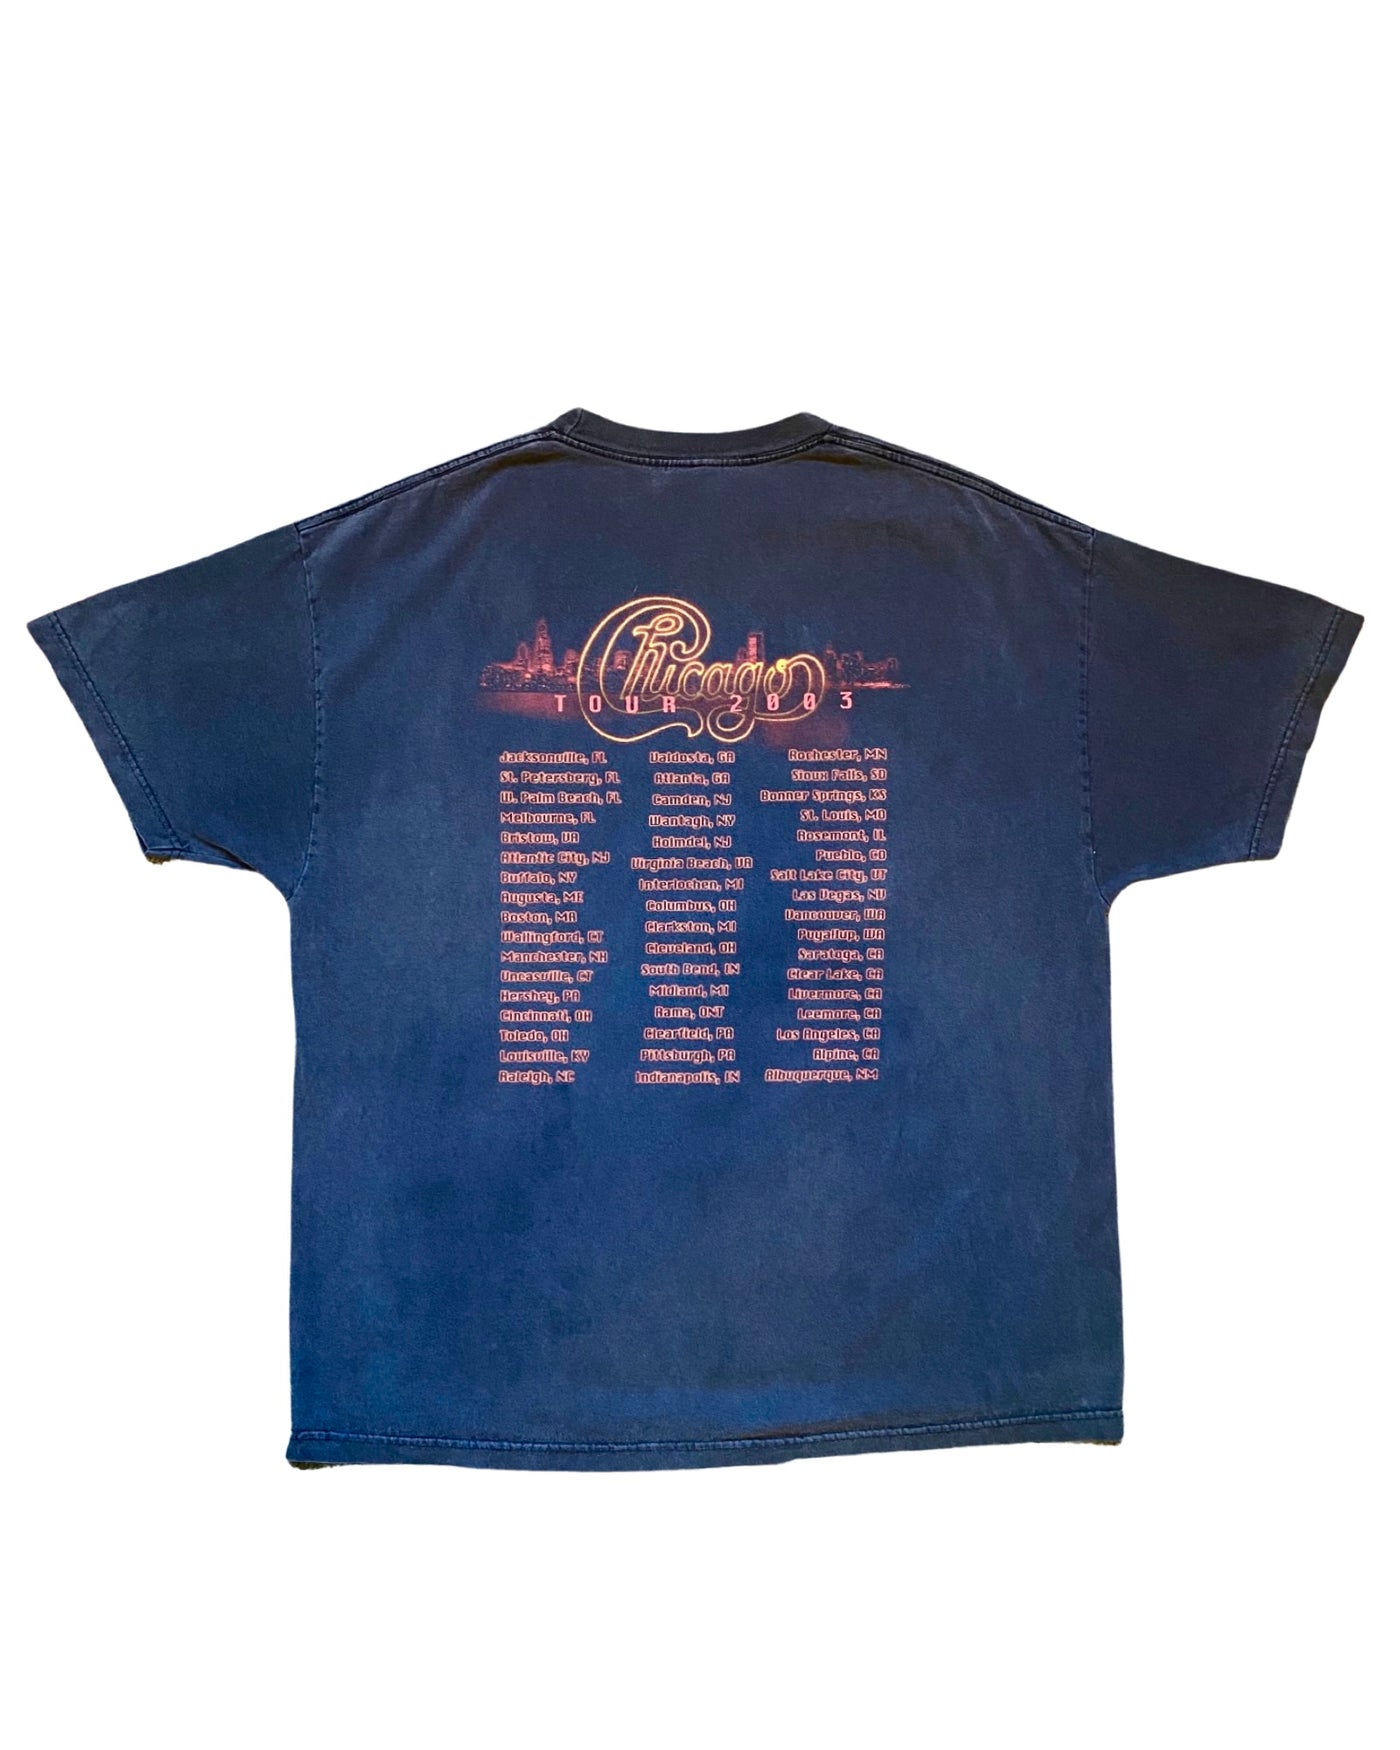 2003 Chicago Tour T-Shirt